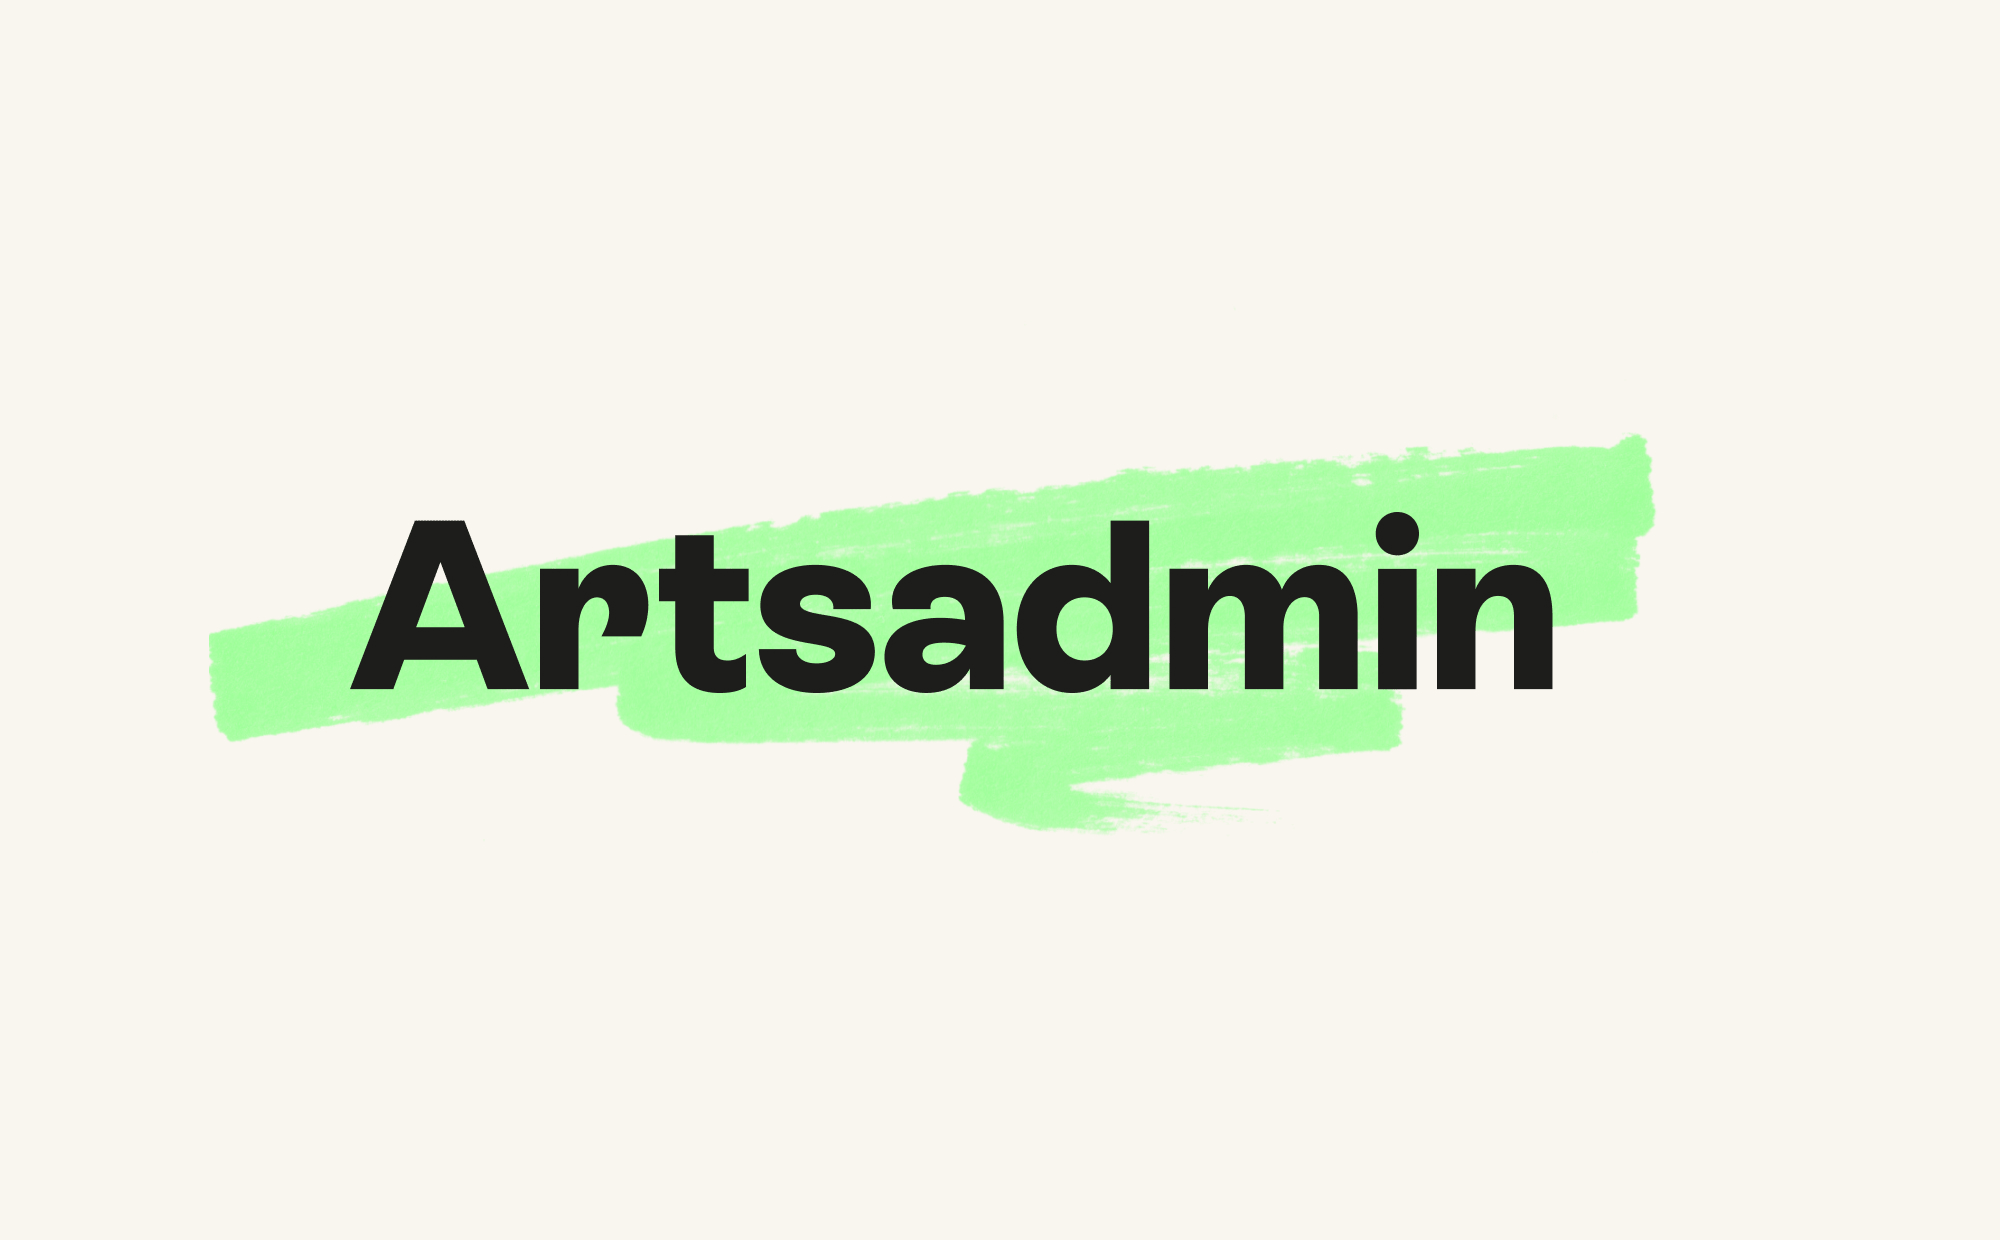 Cover image: Artsadmin rebrand